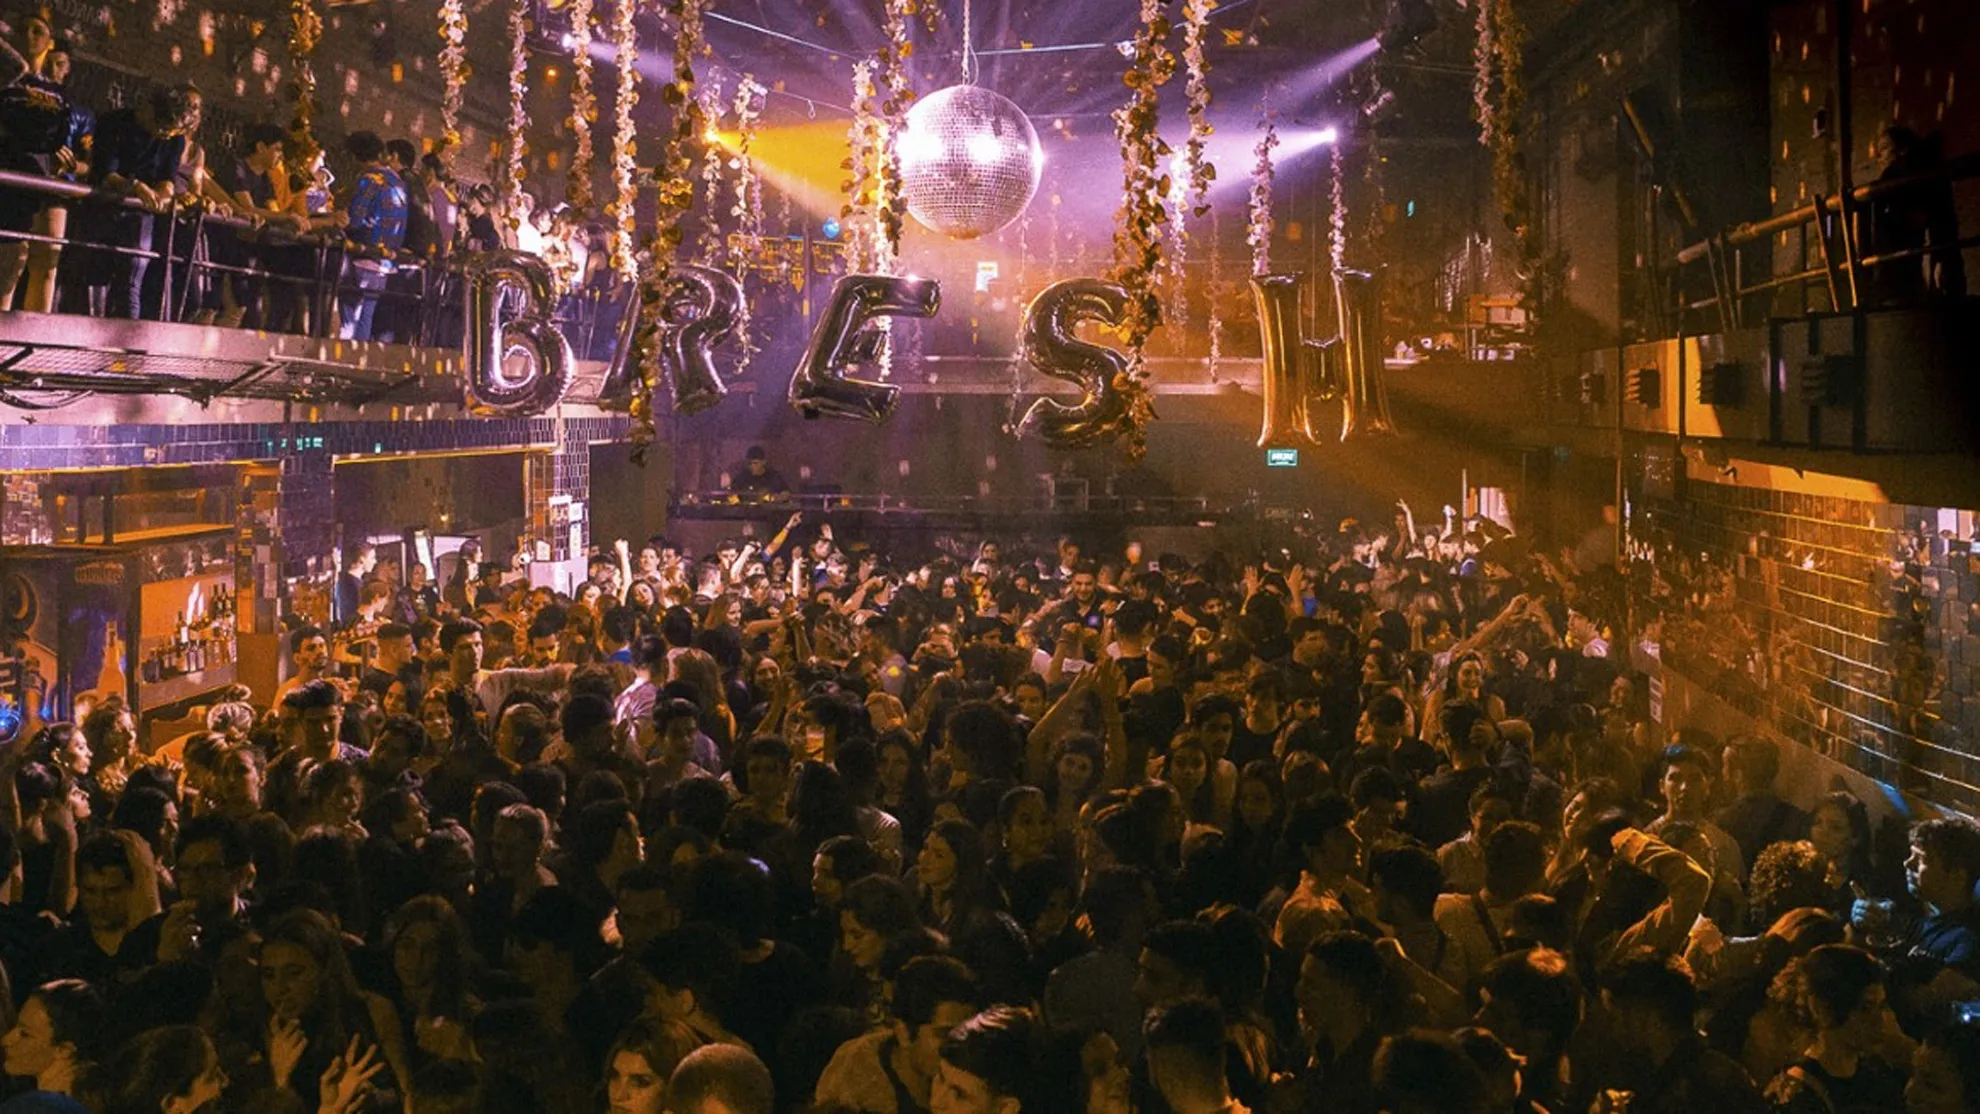 Azucar Ibiza in Spain, Europe | Nightclubs - Rated 0.6